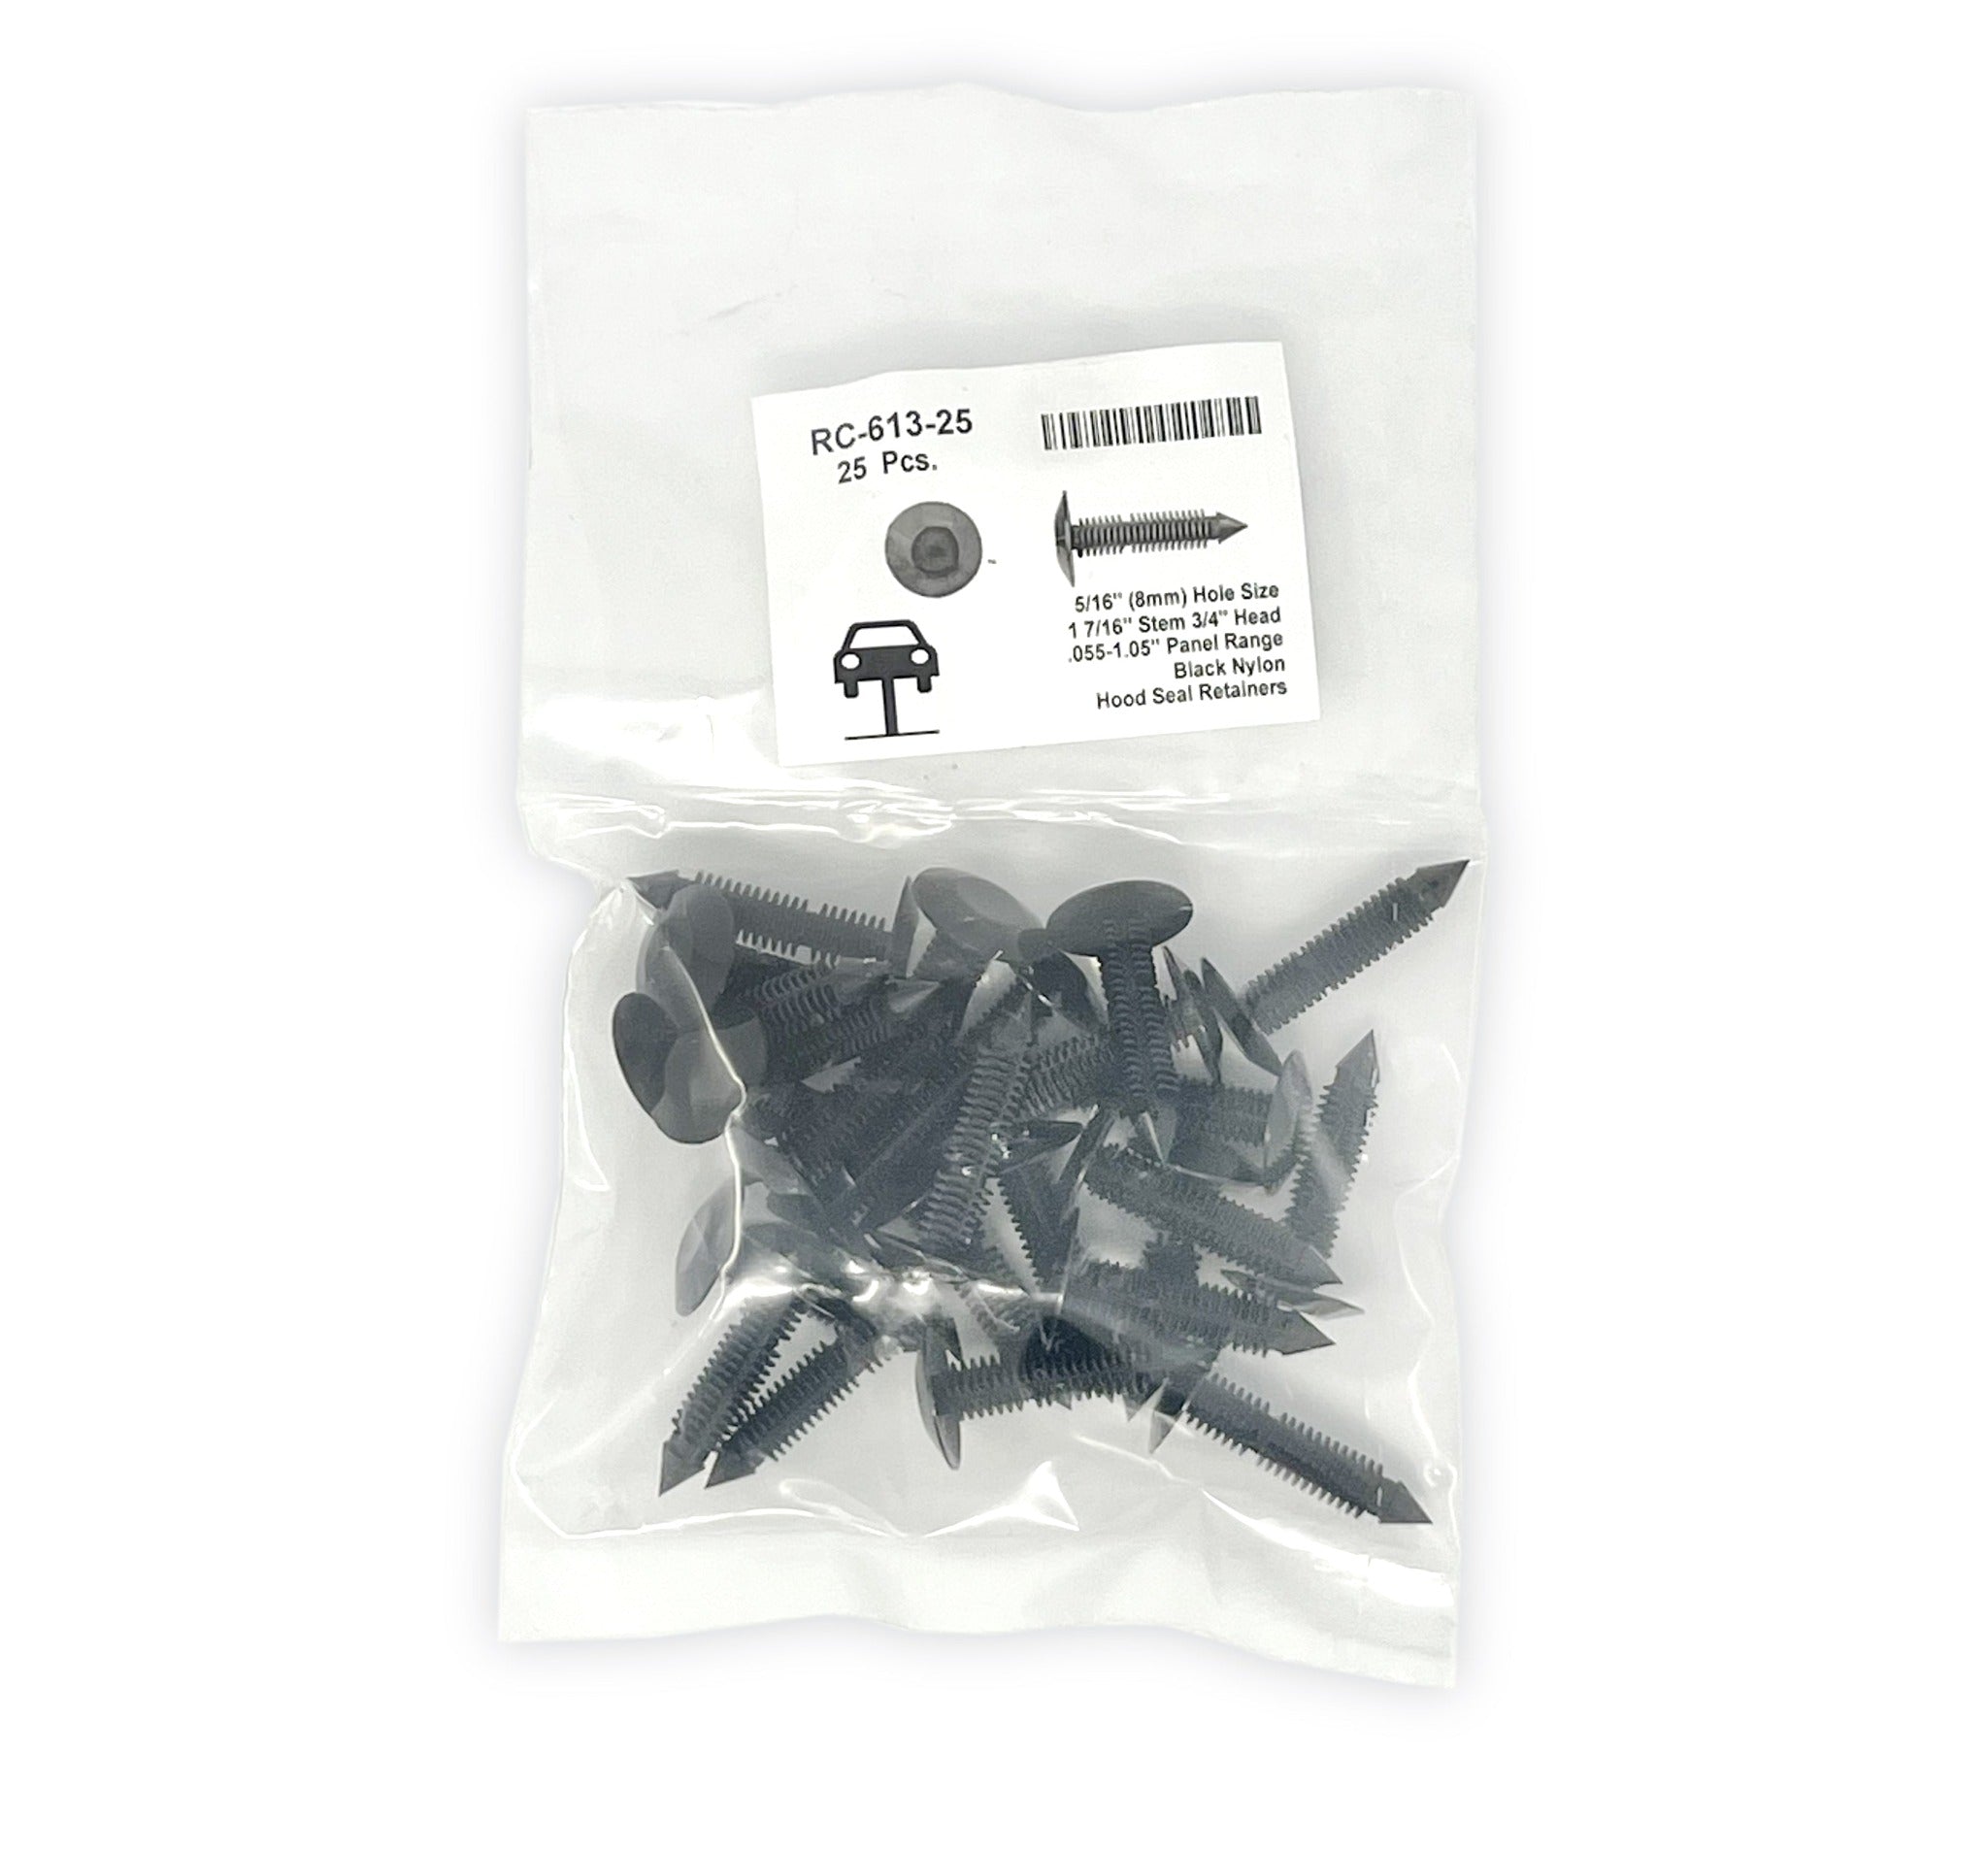 Black Universal Nylon Hood Seal Retainer Head Diameter 3/4", Stem Diameter 5/16", Stem Length 1 3/8" GM # 14074081 (Pack of 25)